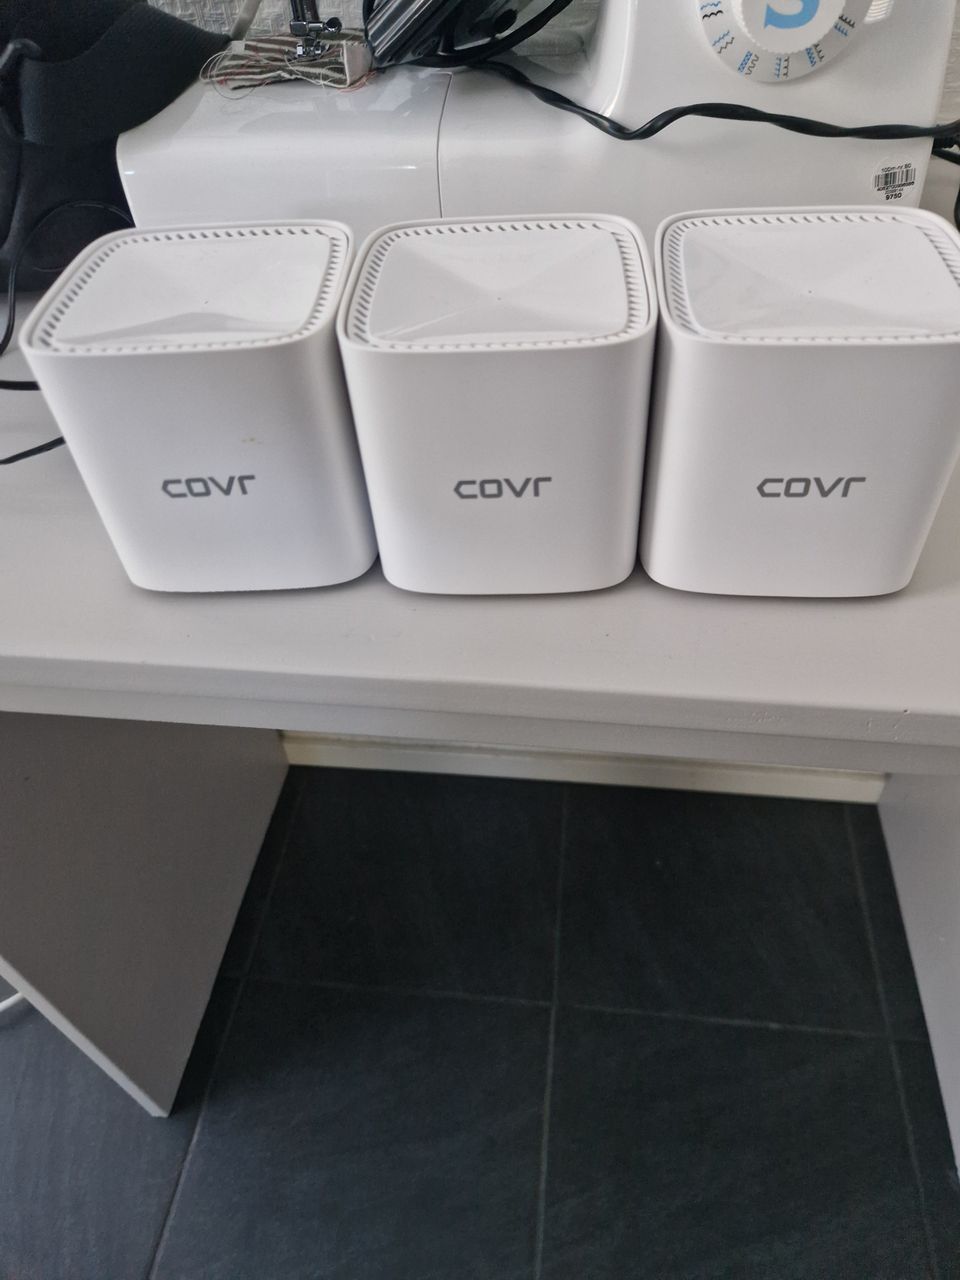 D-link Covr-1103 mesh WiFi reititin